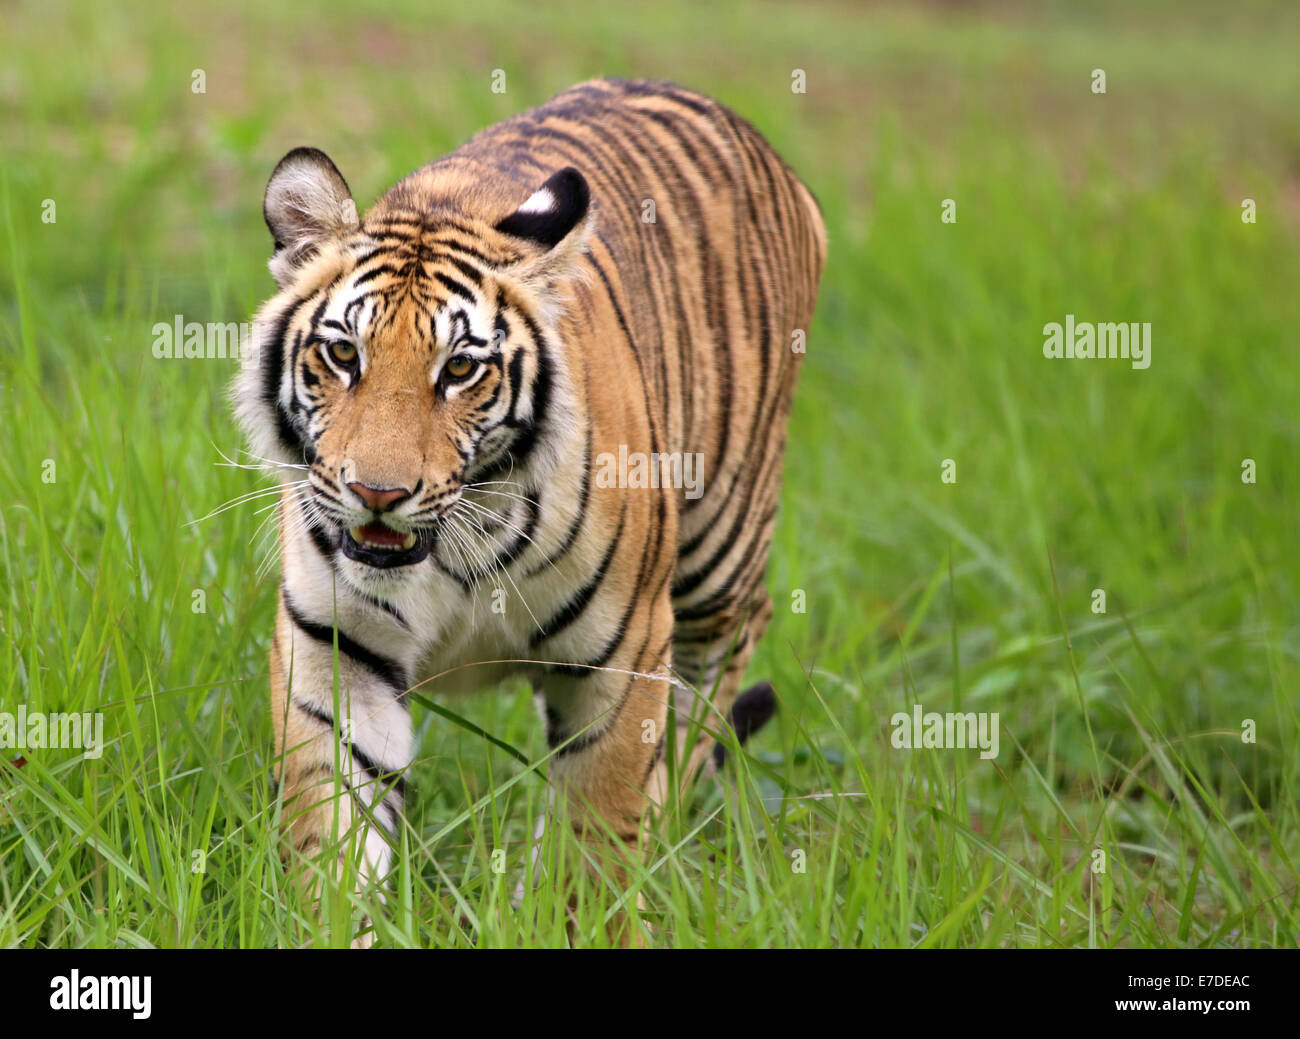 Tiger im Dschungel mit selektiven Fokus Stockfoto